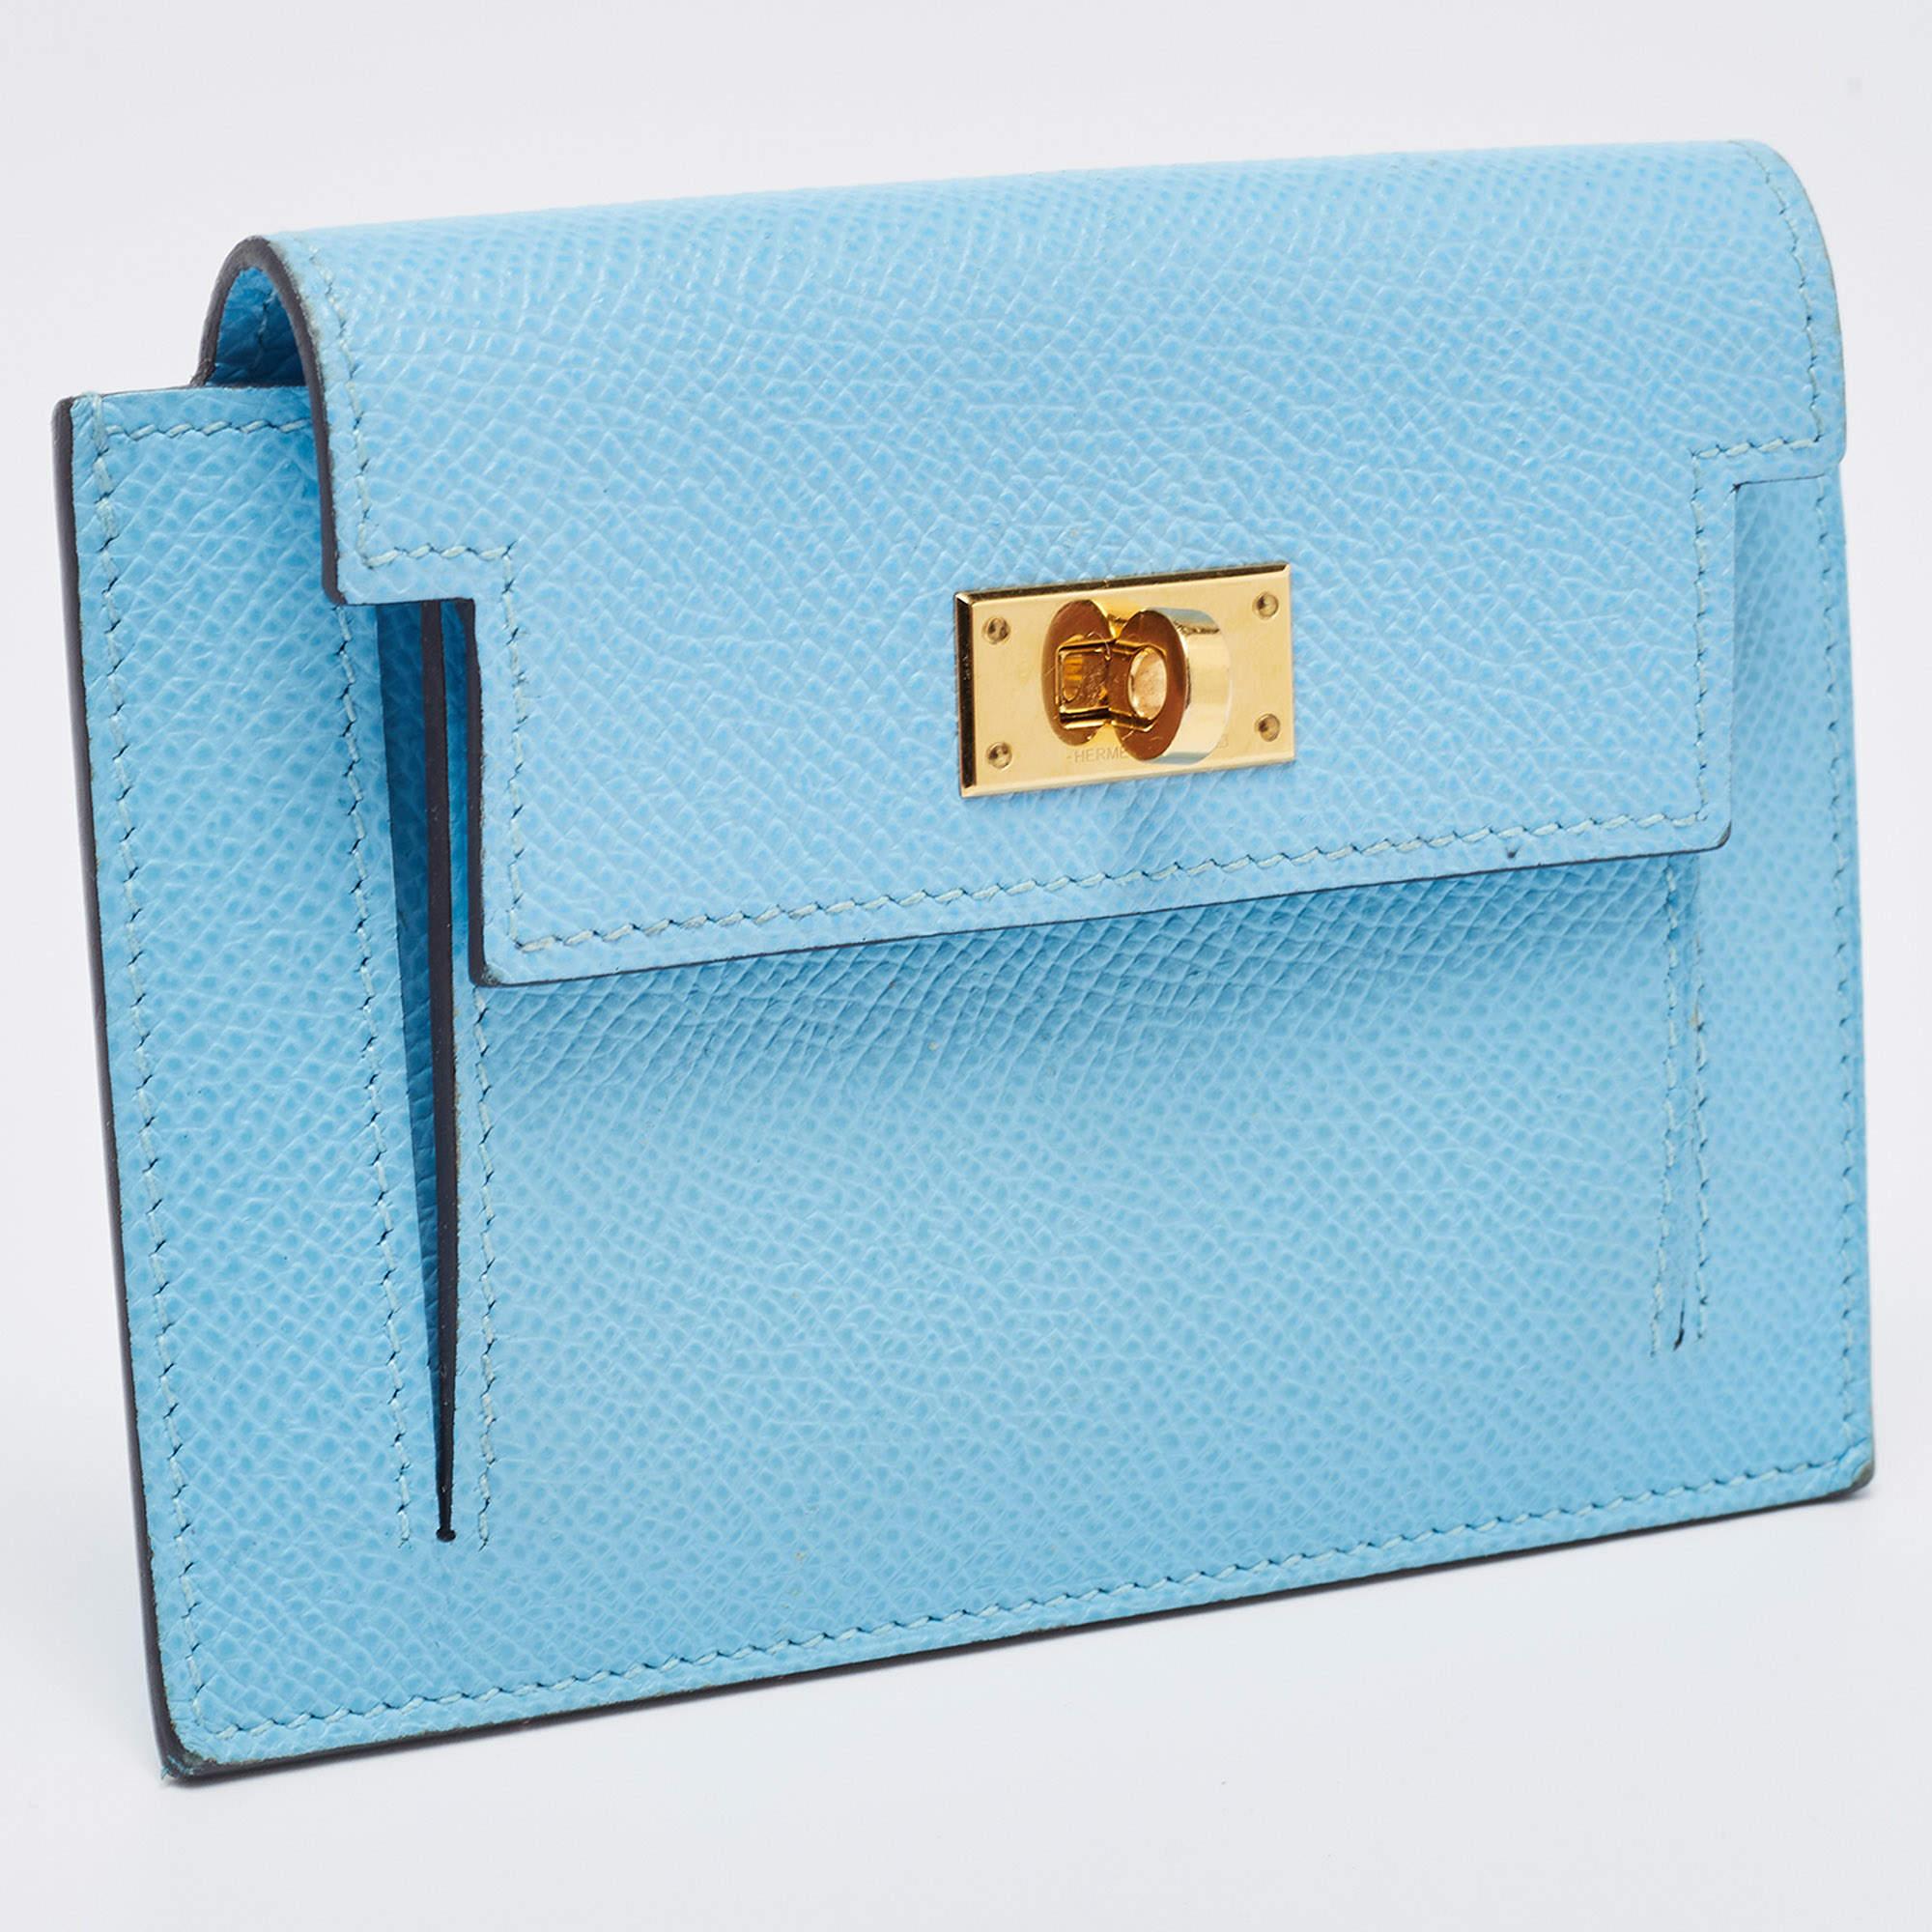 Hermes Celeste Epsom Leather Kelly Pocket Compact Wallet In Good Condition For Sale In Dubai, Al Qouz 2